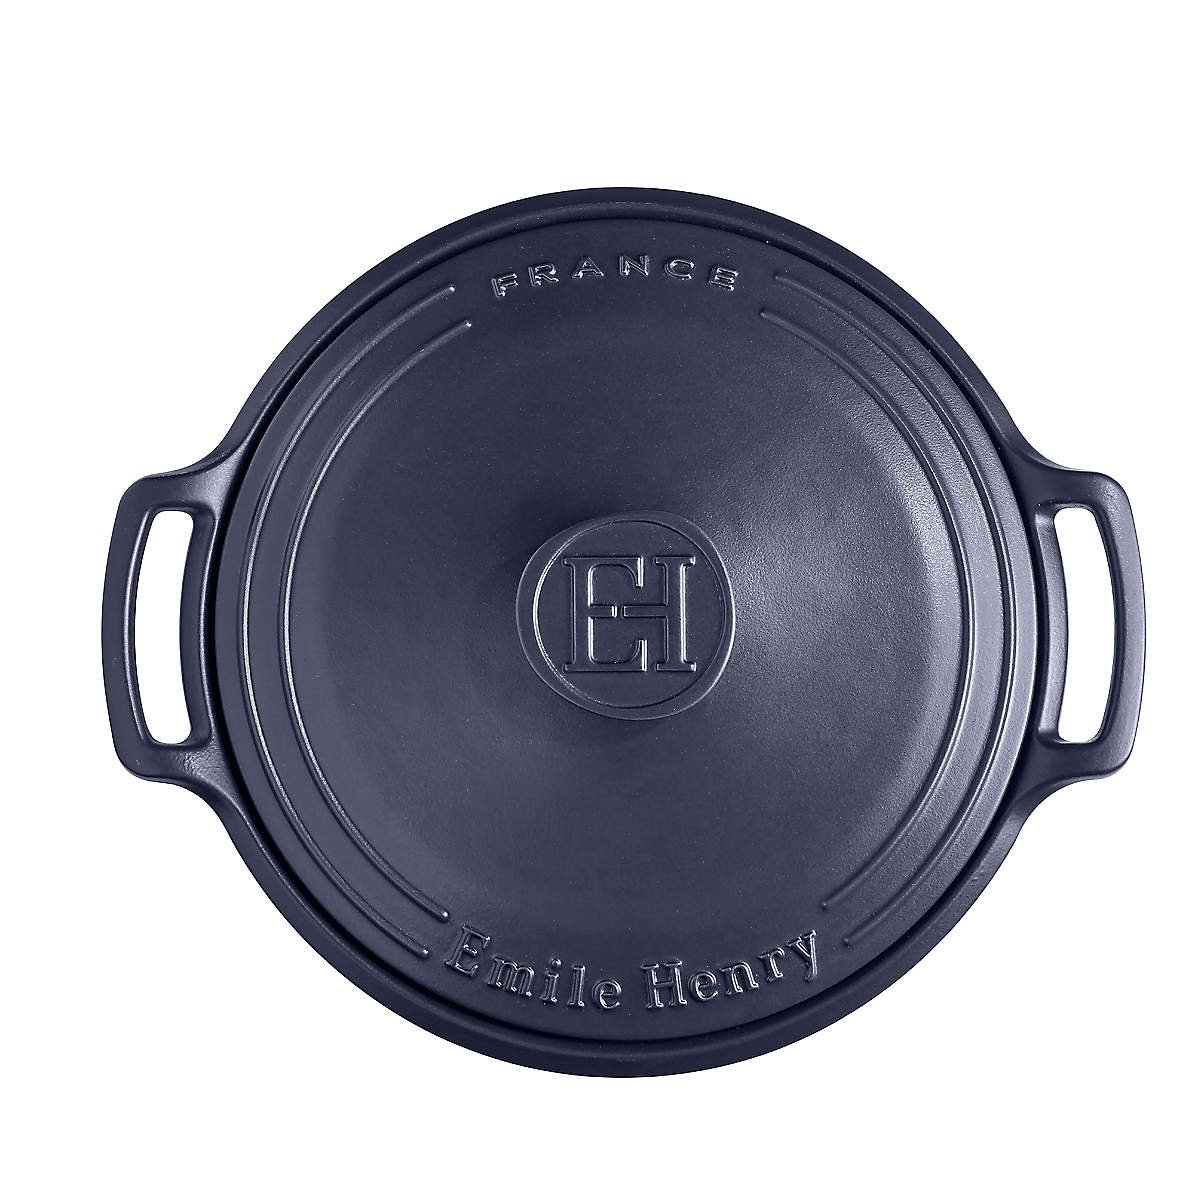 Emile Henry 4-Qt. Blue Round Ceramic Dutch Oven Stewpot Cocotte